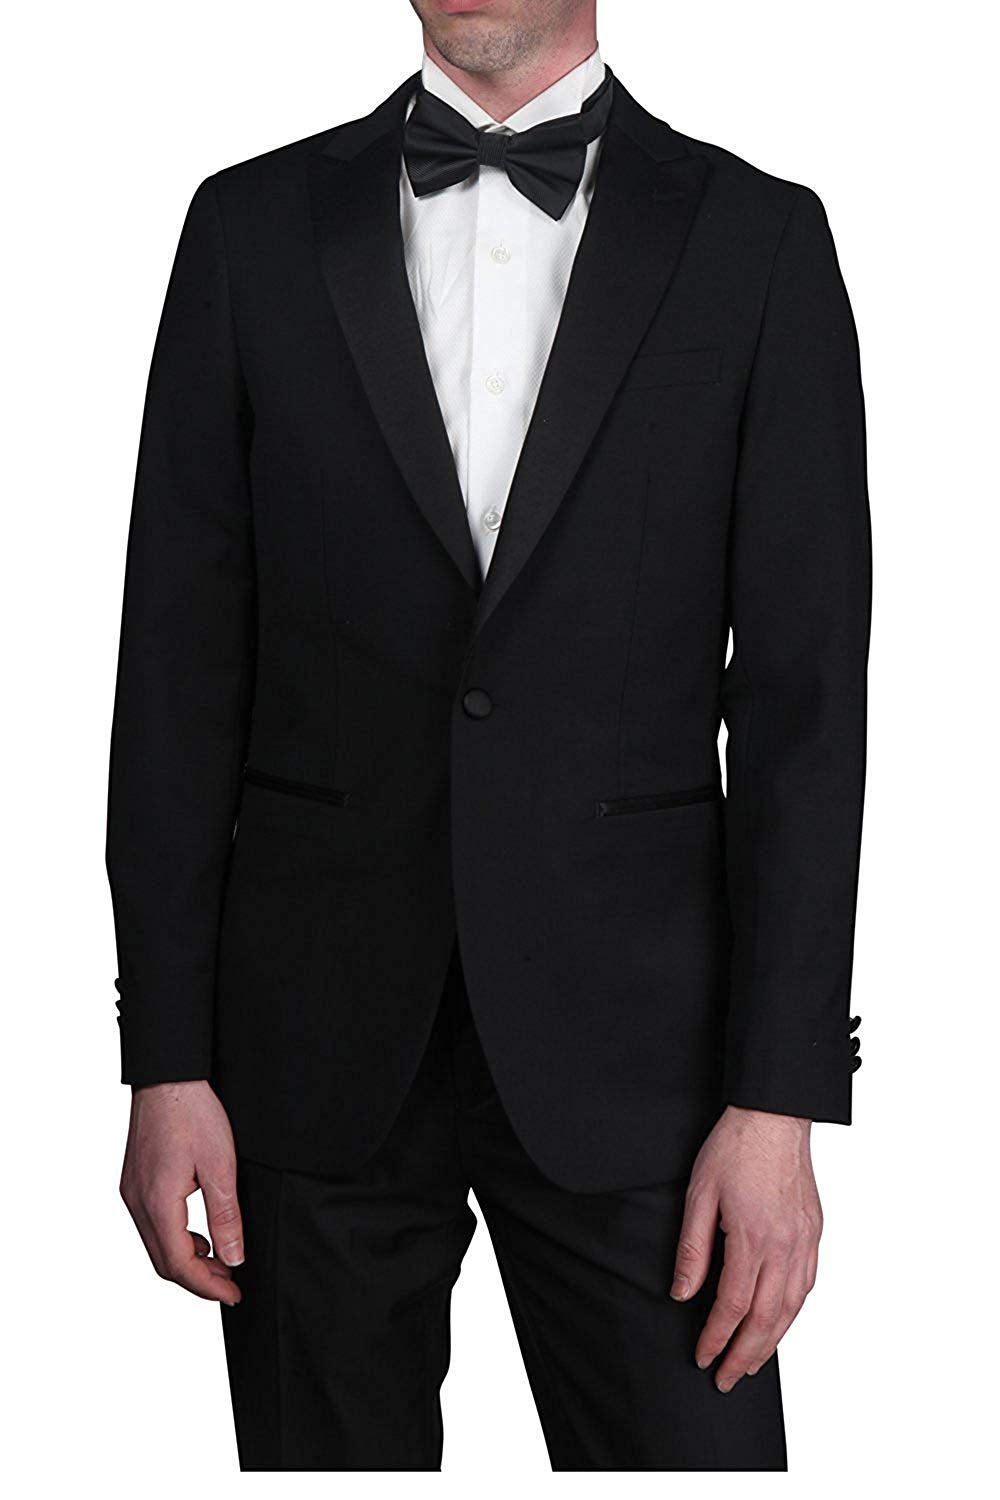 Giorgio Fiorelli Men’s G47815/1 One Button Modern Fit Two-Piece Peak Lapel Tuxedo Suit Set - Black - 40S - image 1 of 2